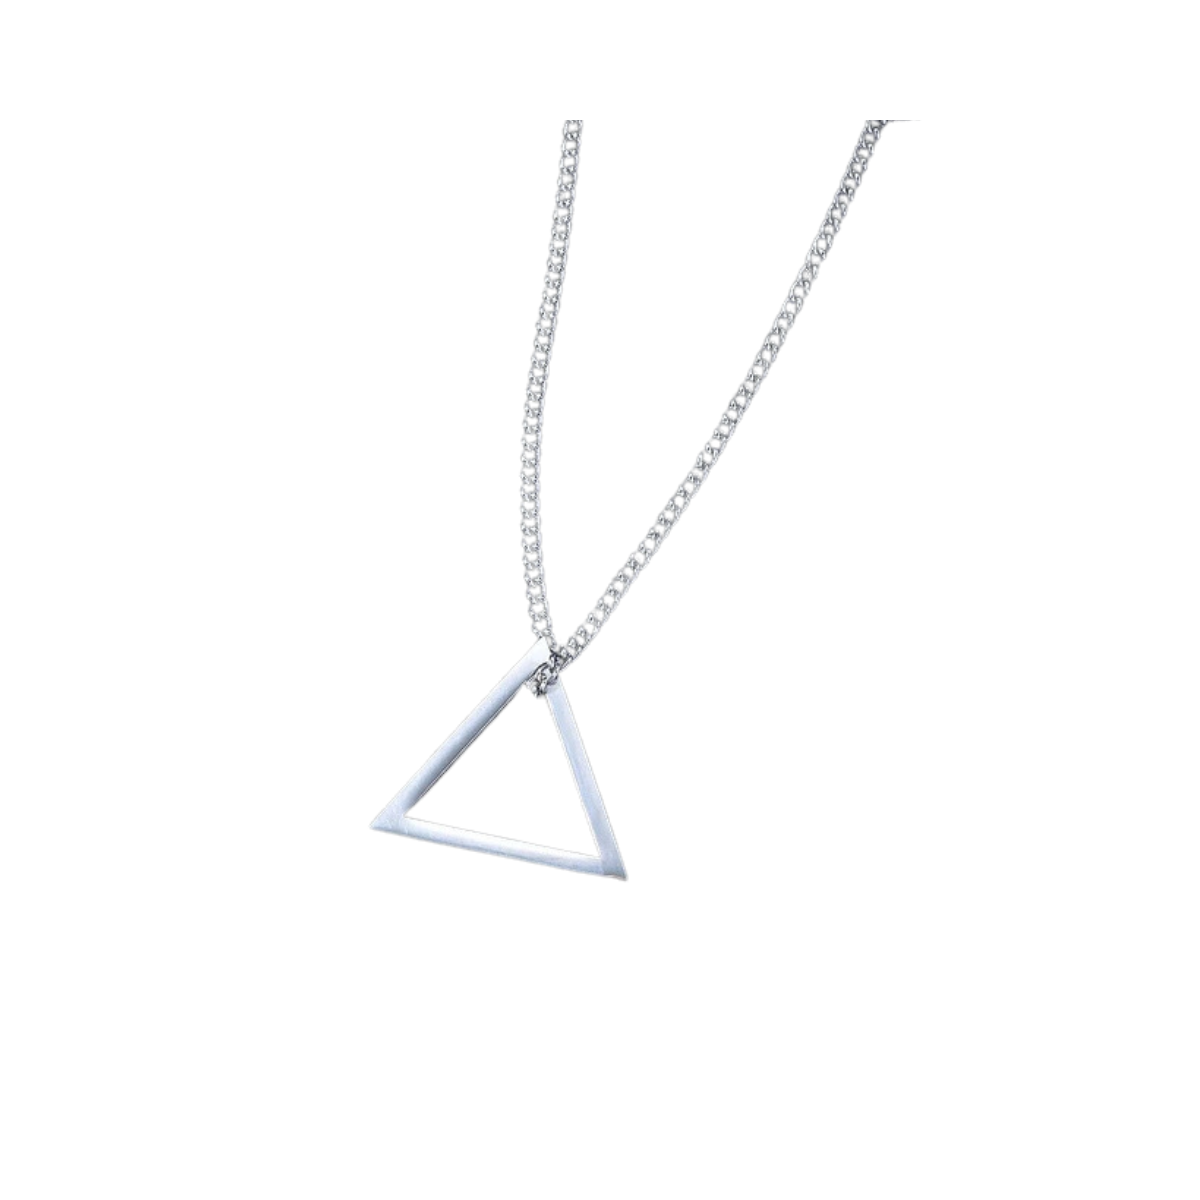 10pcs - Unisex Silver Tone Simply Triangle Pendant Necklace|GCJ432|UK seller